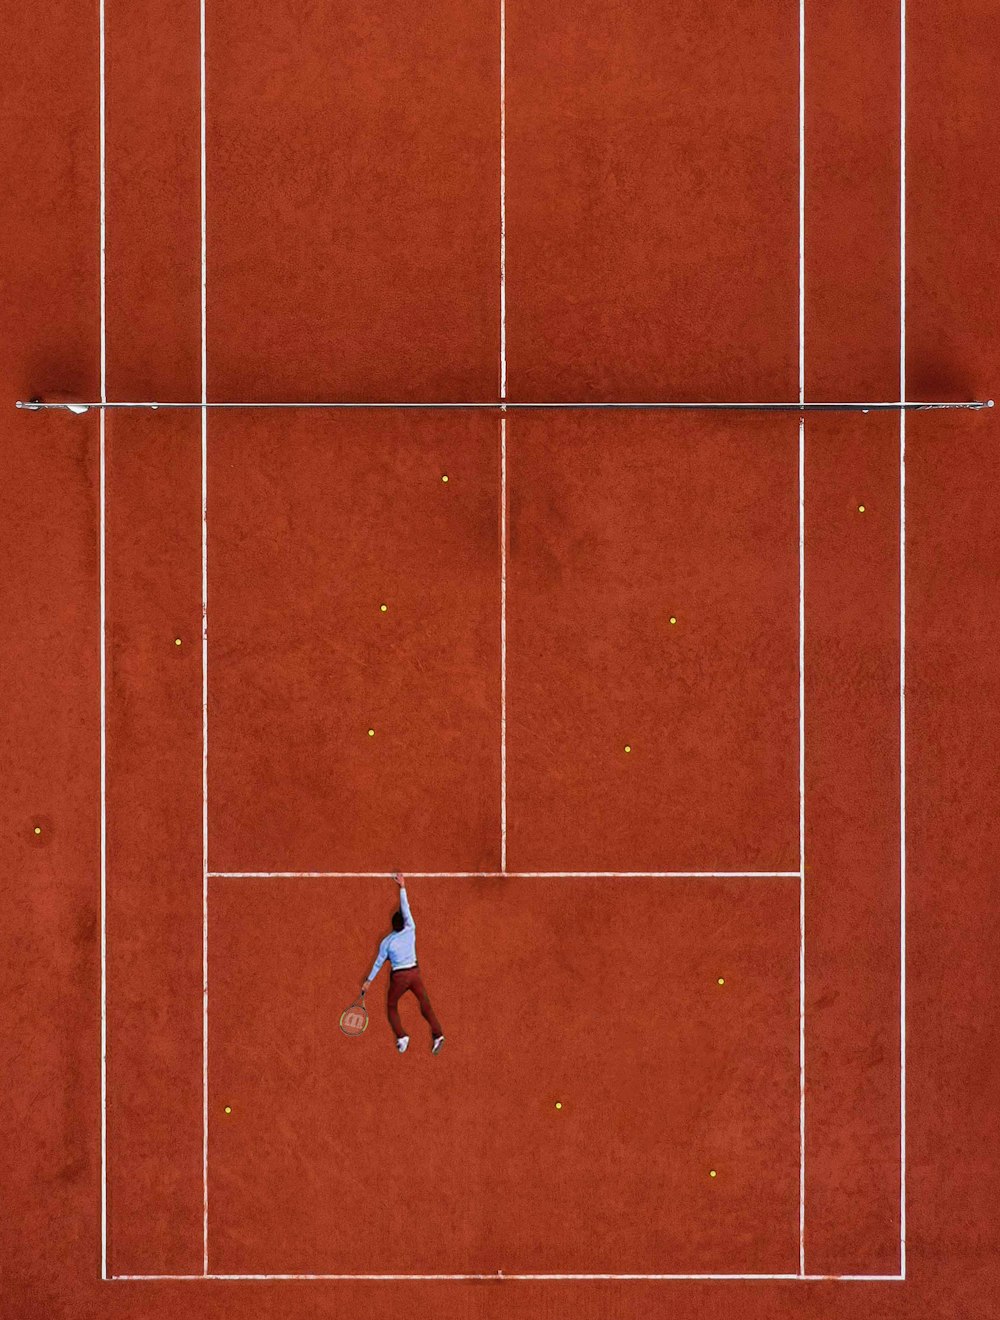 man lying on tennis field